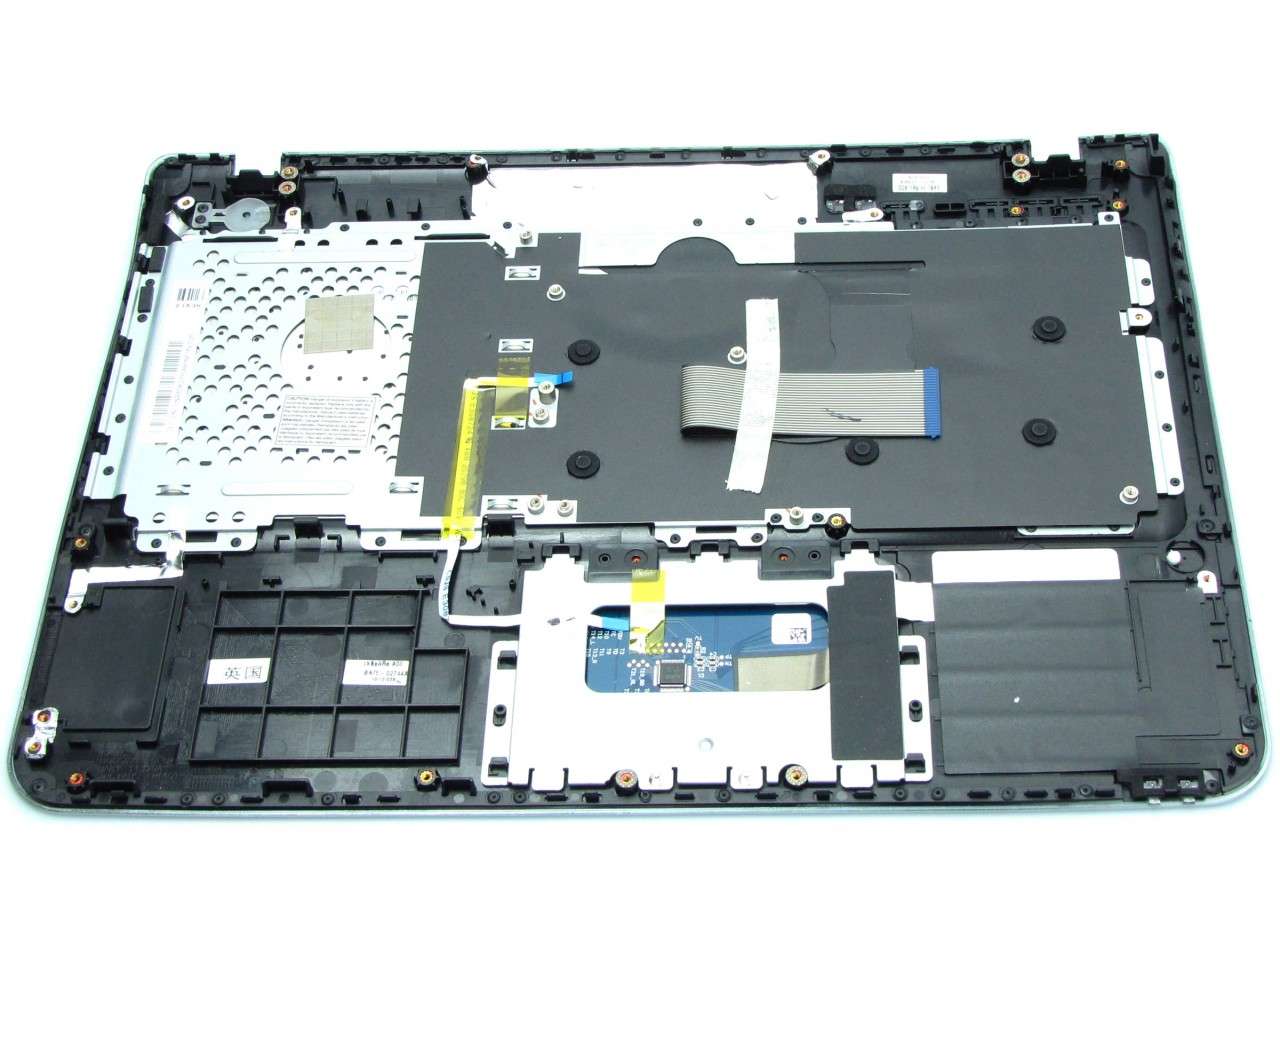 Tastatura Samsung SF410 cu Palmrest si Touchpad layout UK enter mare imagine 2021 powerlaptop.ro